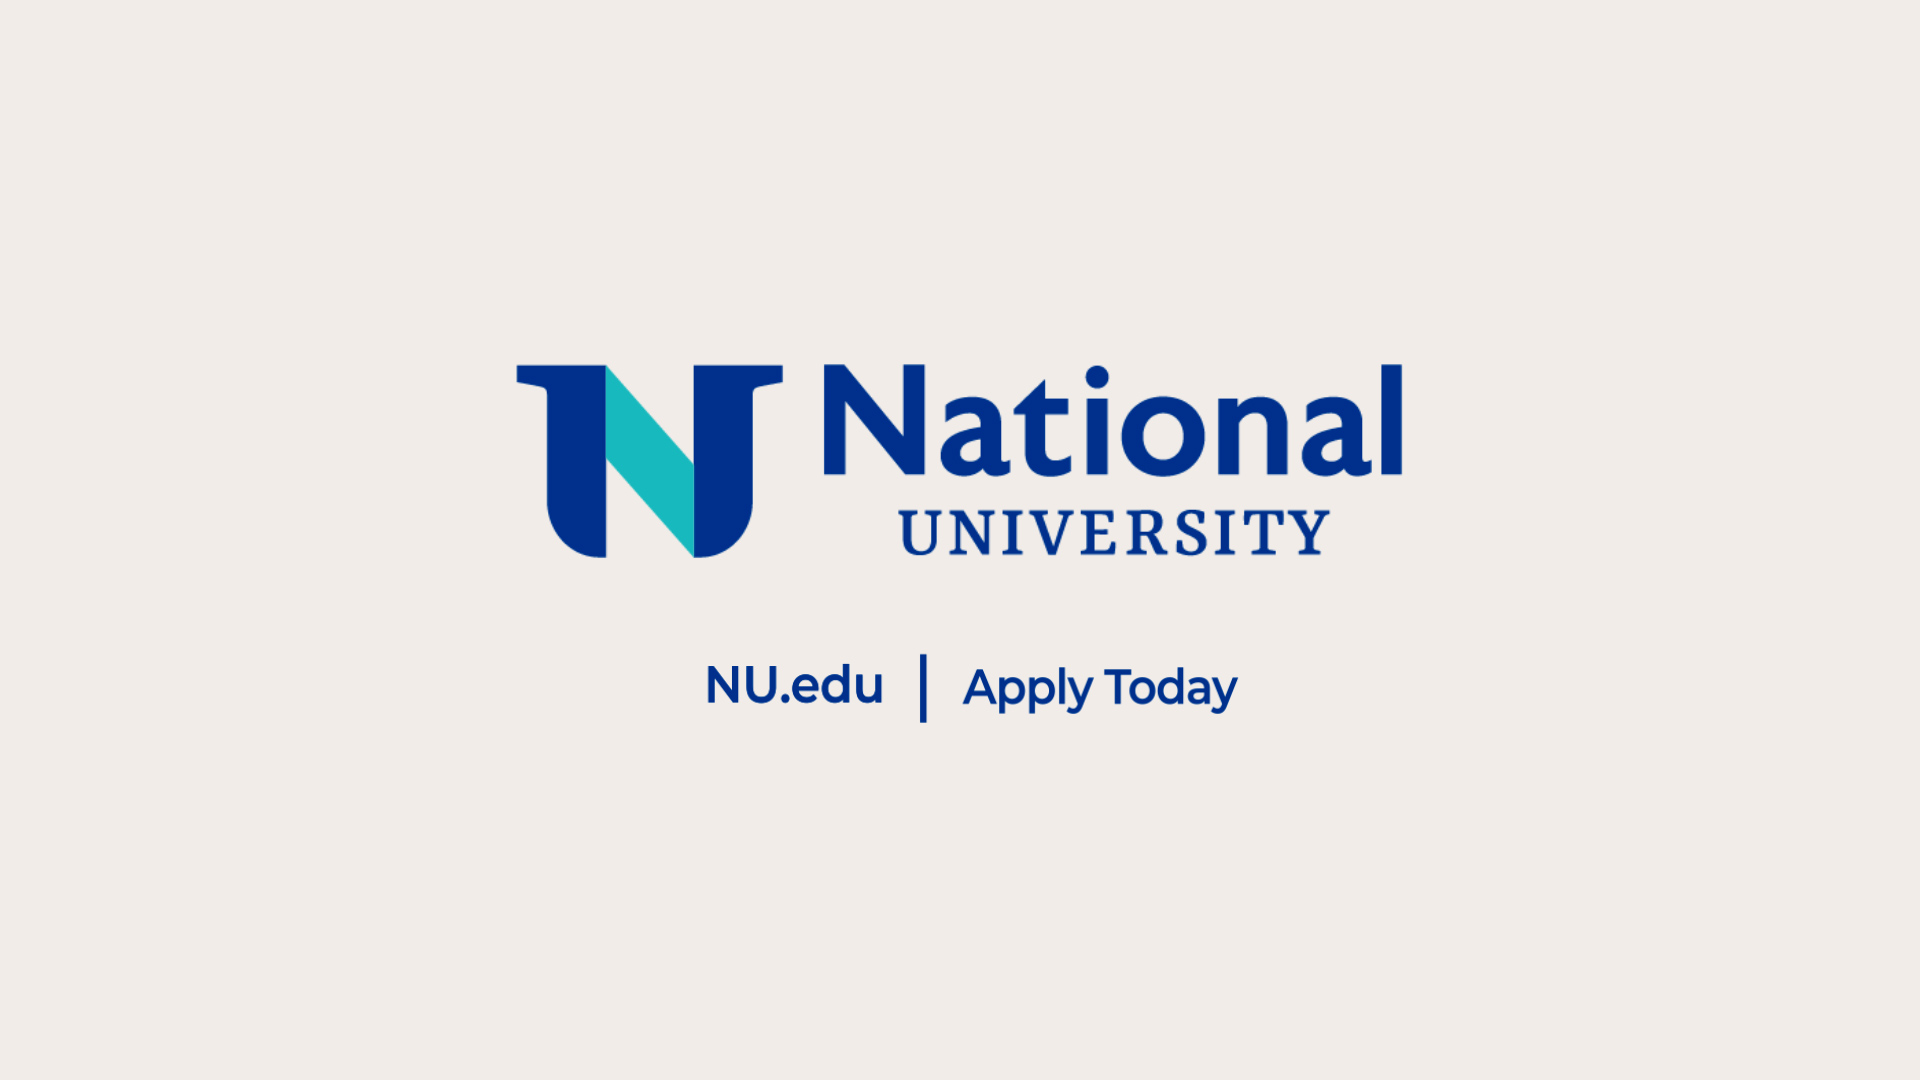 national university image apply today